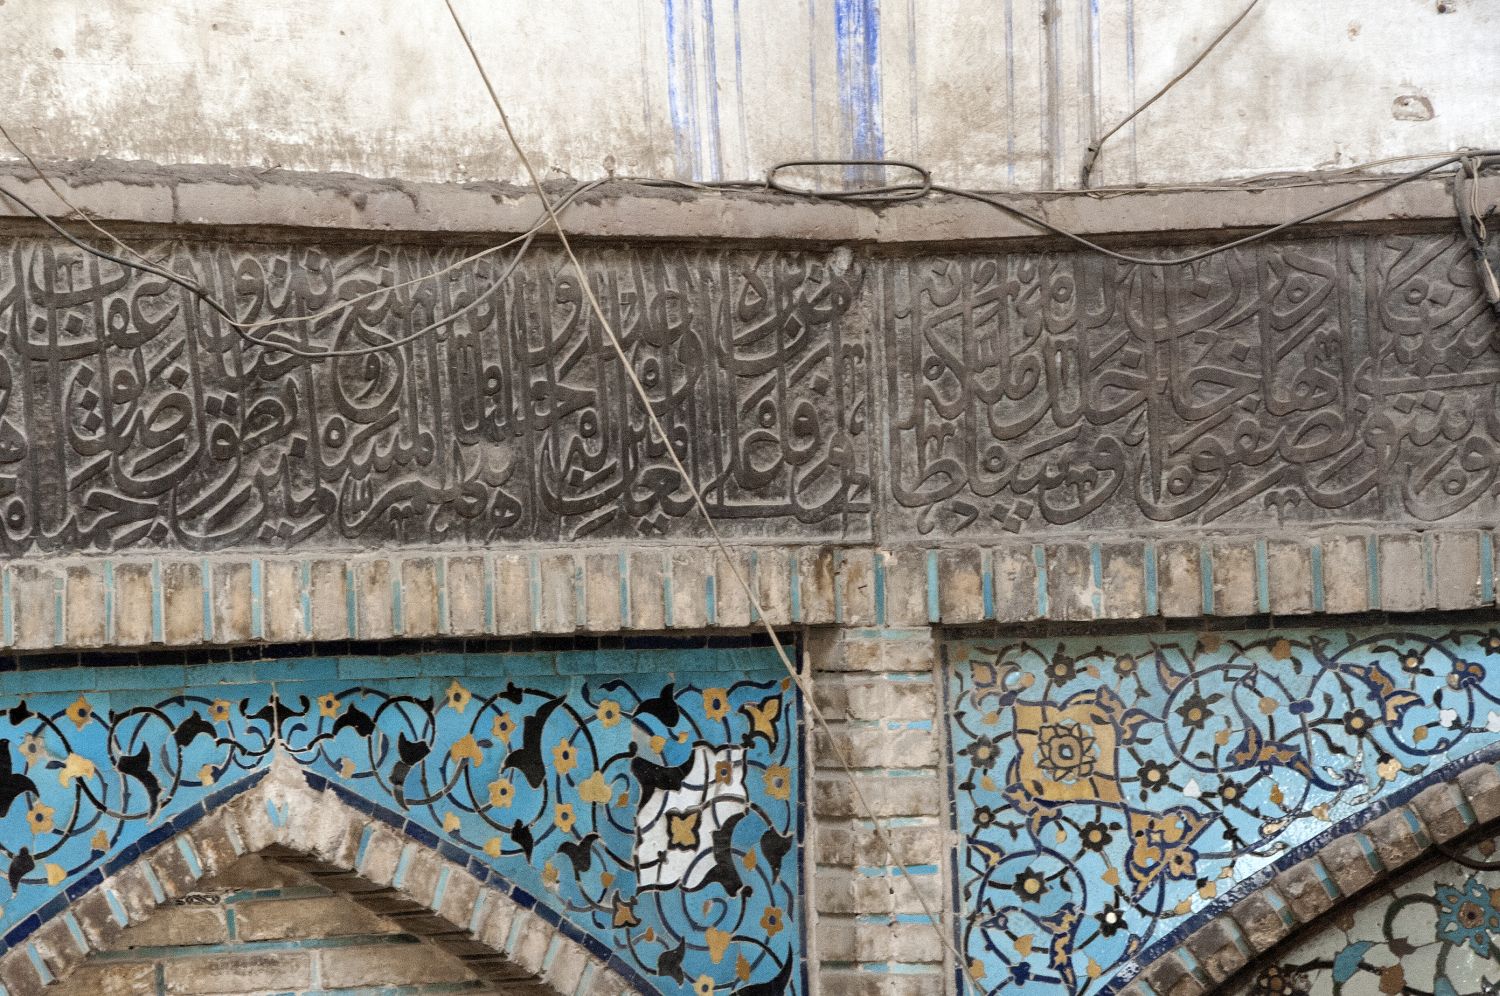 Entrance to Jarchi Mosque (Masjid-i Jarchi-Bashi), detail view of inscription band over tile lunettes.